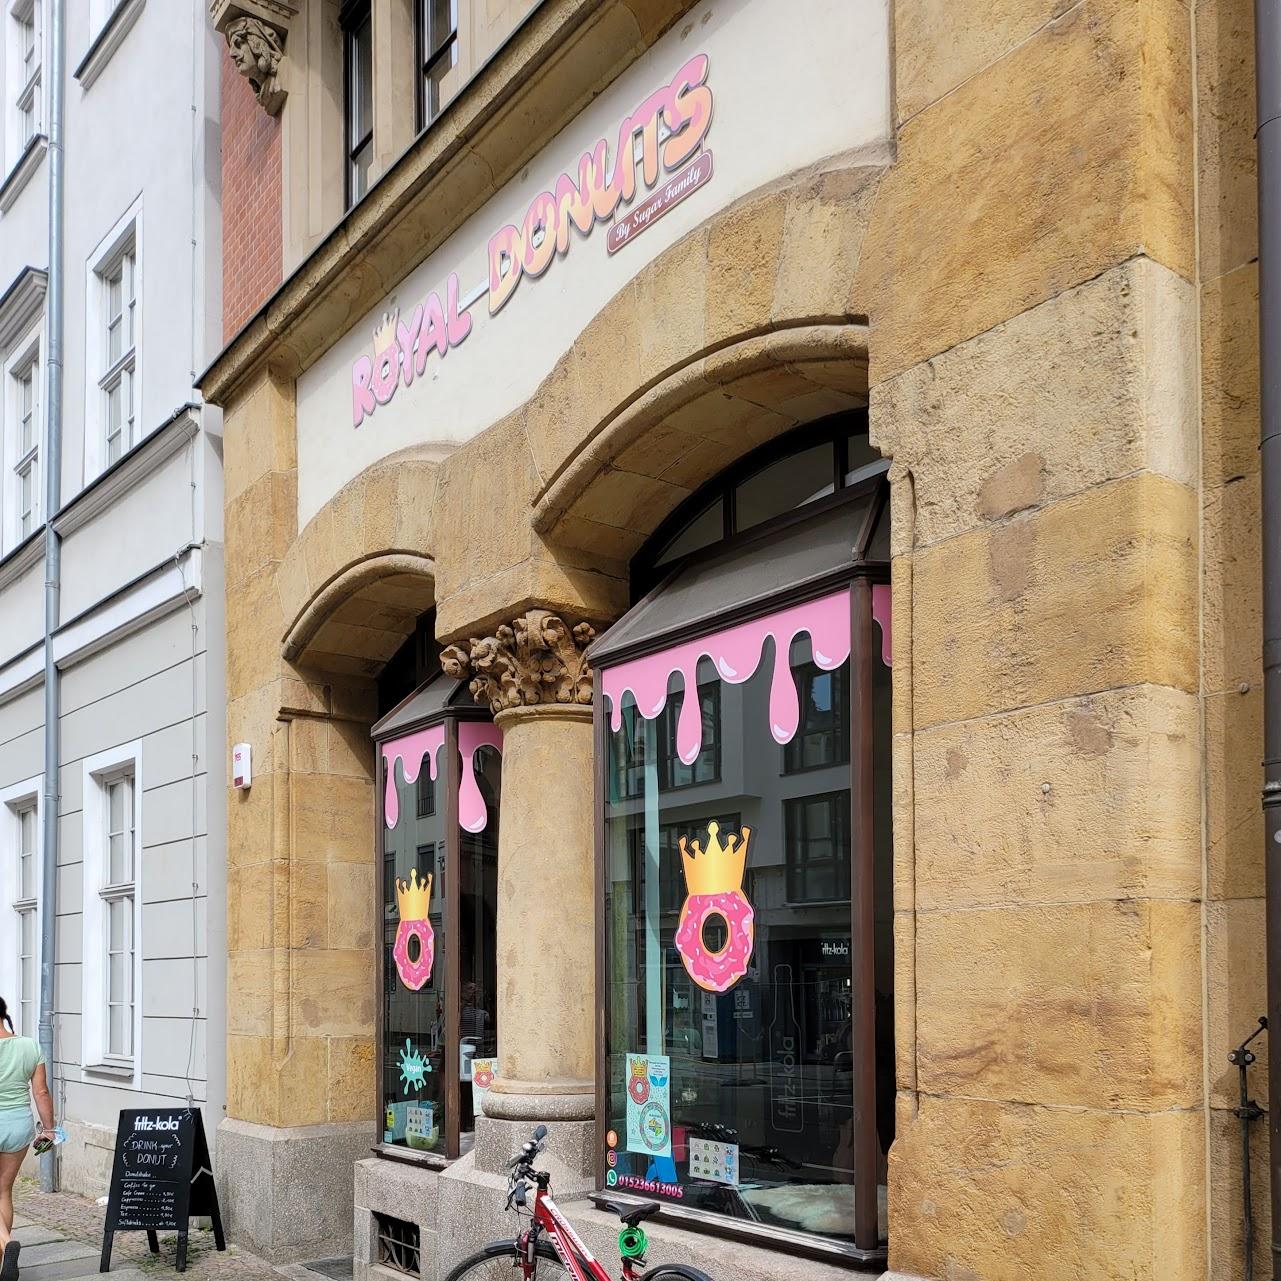 Restaurant "Royal Donuts" in Leipzig